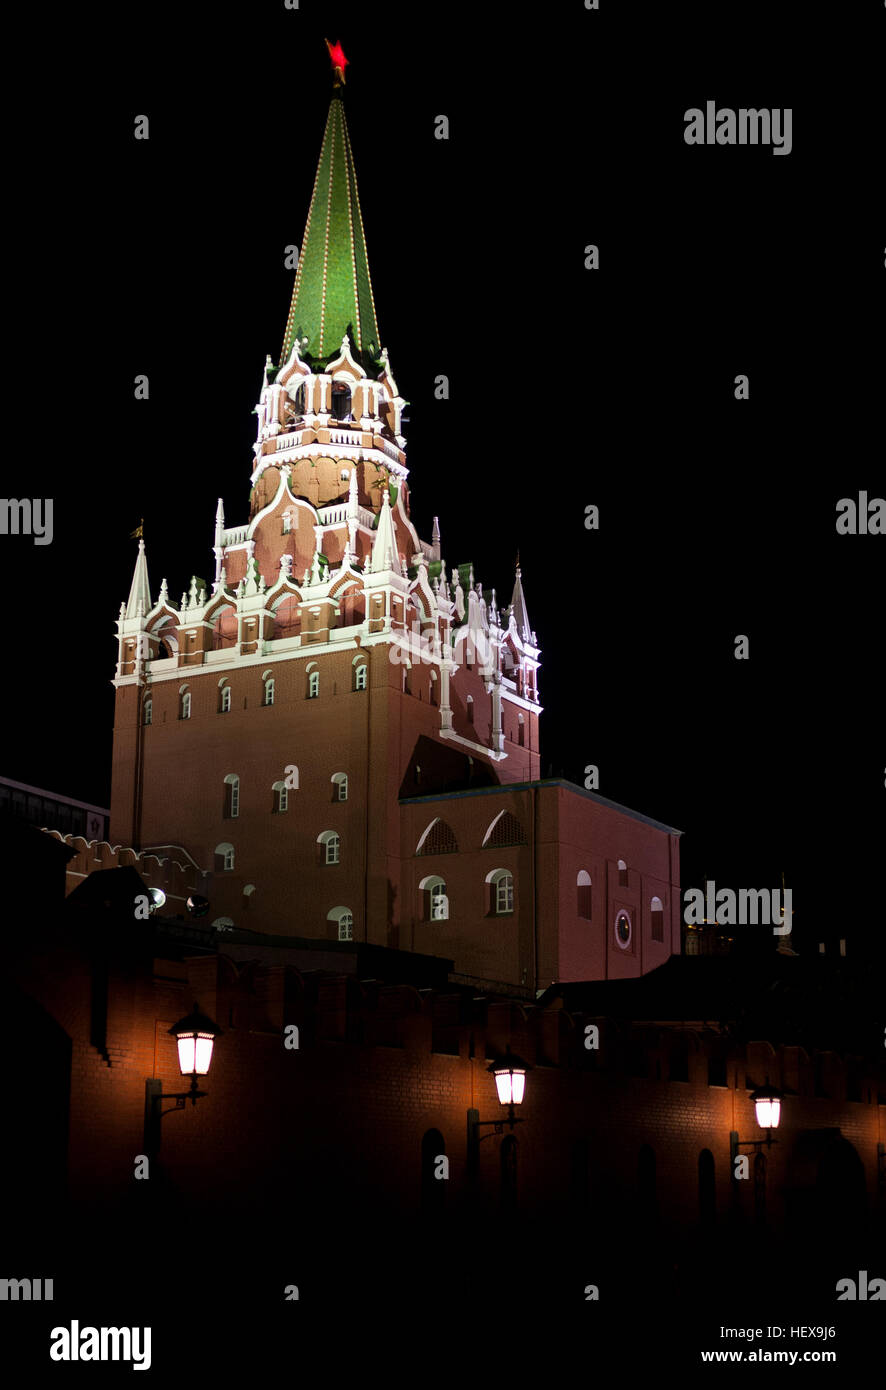 The kremlin tower illuminated at night, Moscow, Russia Stock Photo